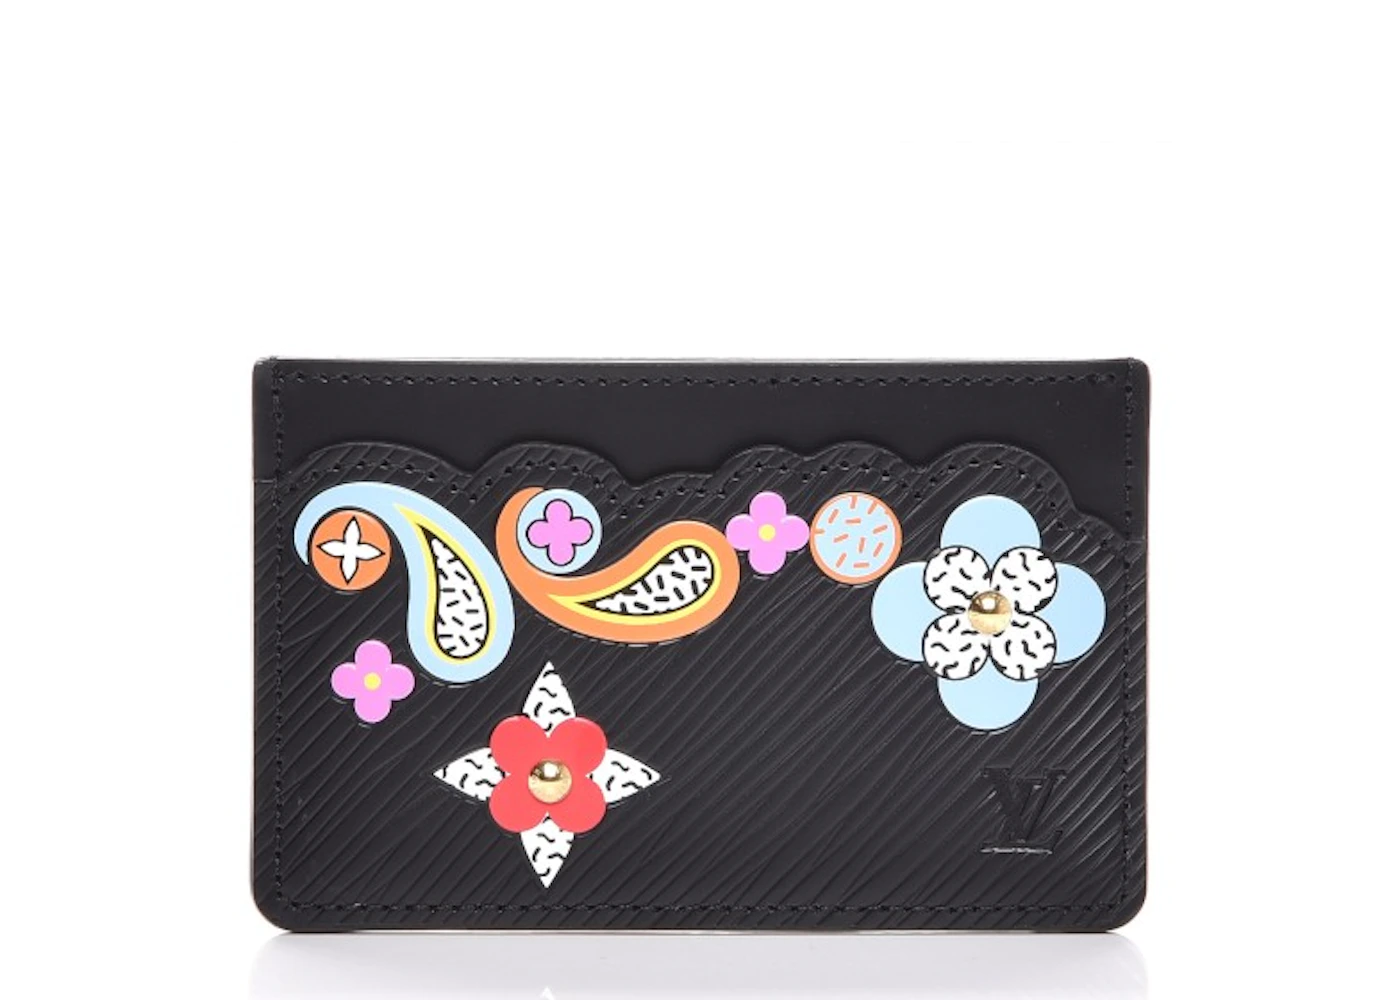 black flower lv wallet